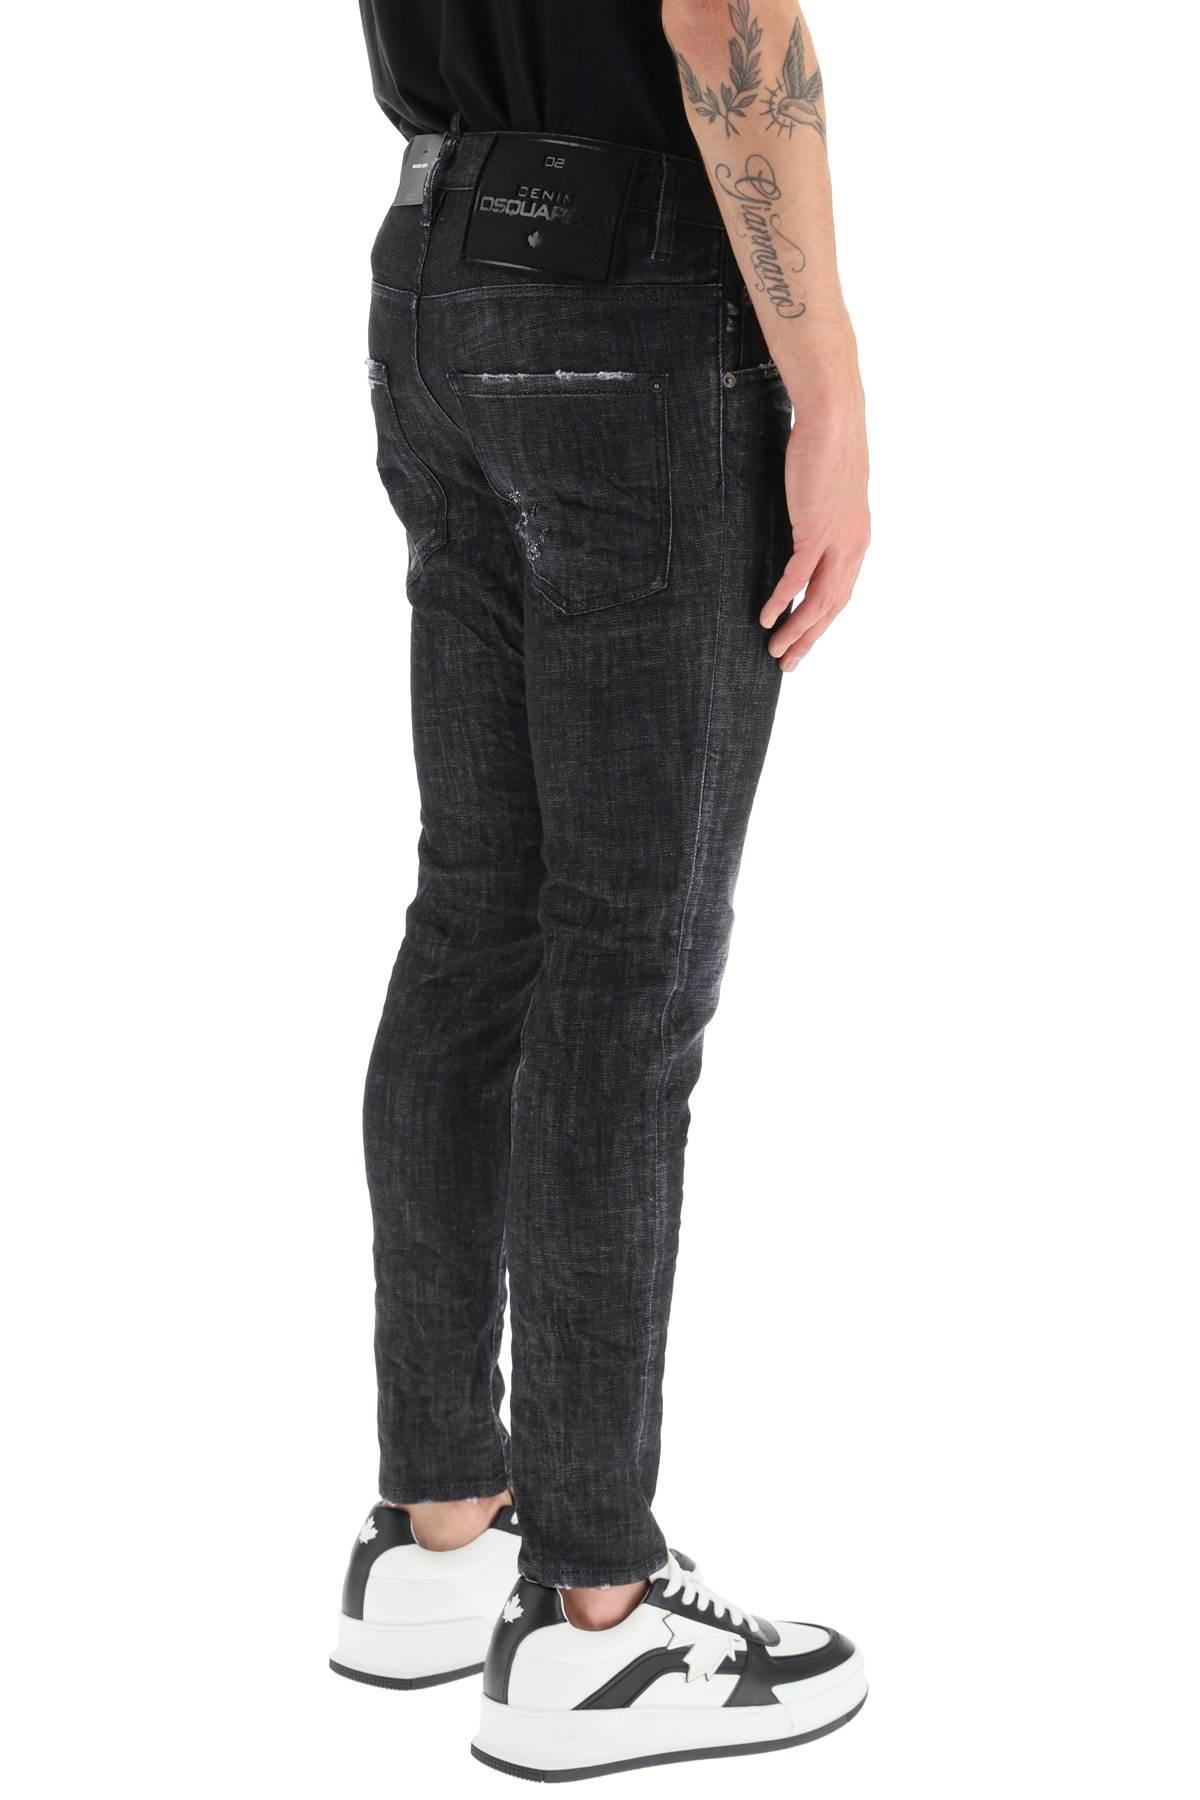 DSquared² Black Clean Wash Skater Fit Jeans in Gray for Men   Lyst